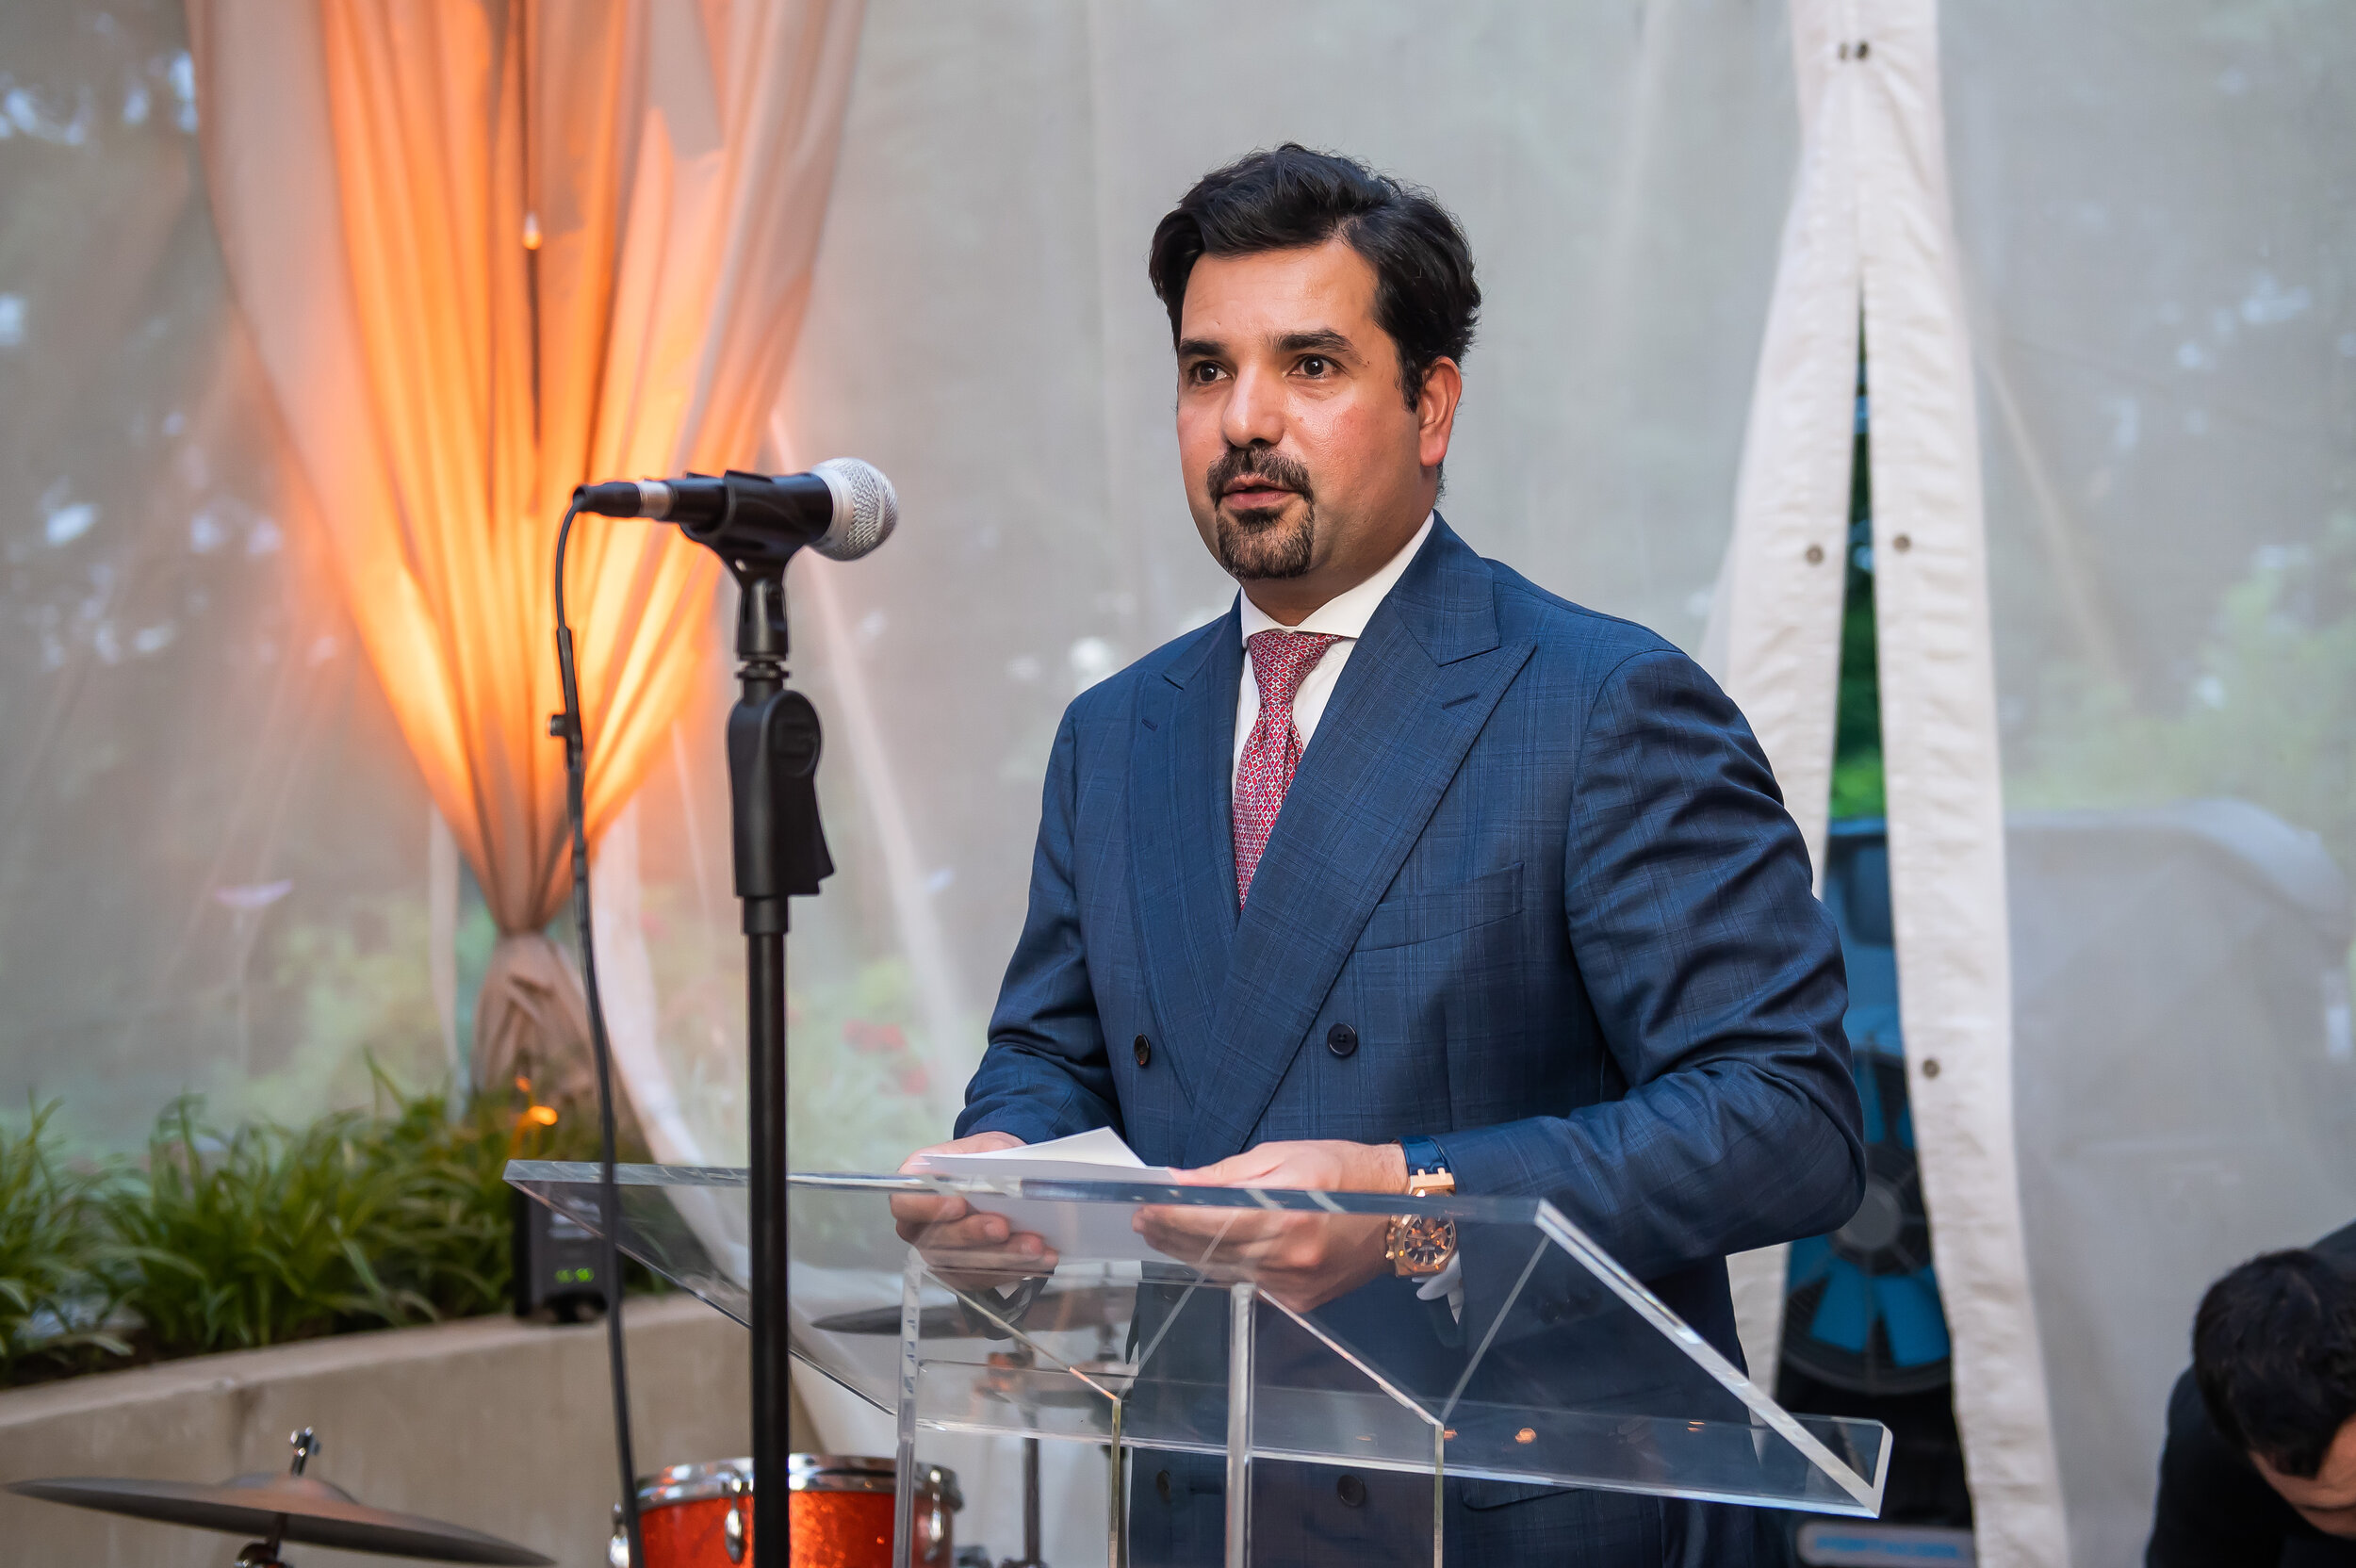 Ambassador Al-Thani delivering the evenings opening remarks